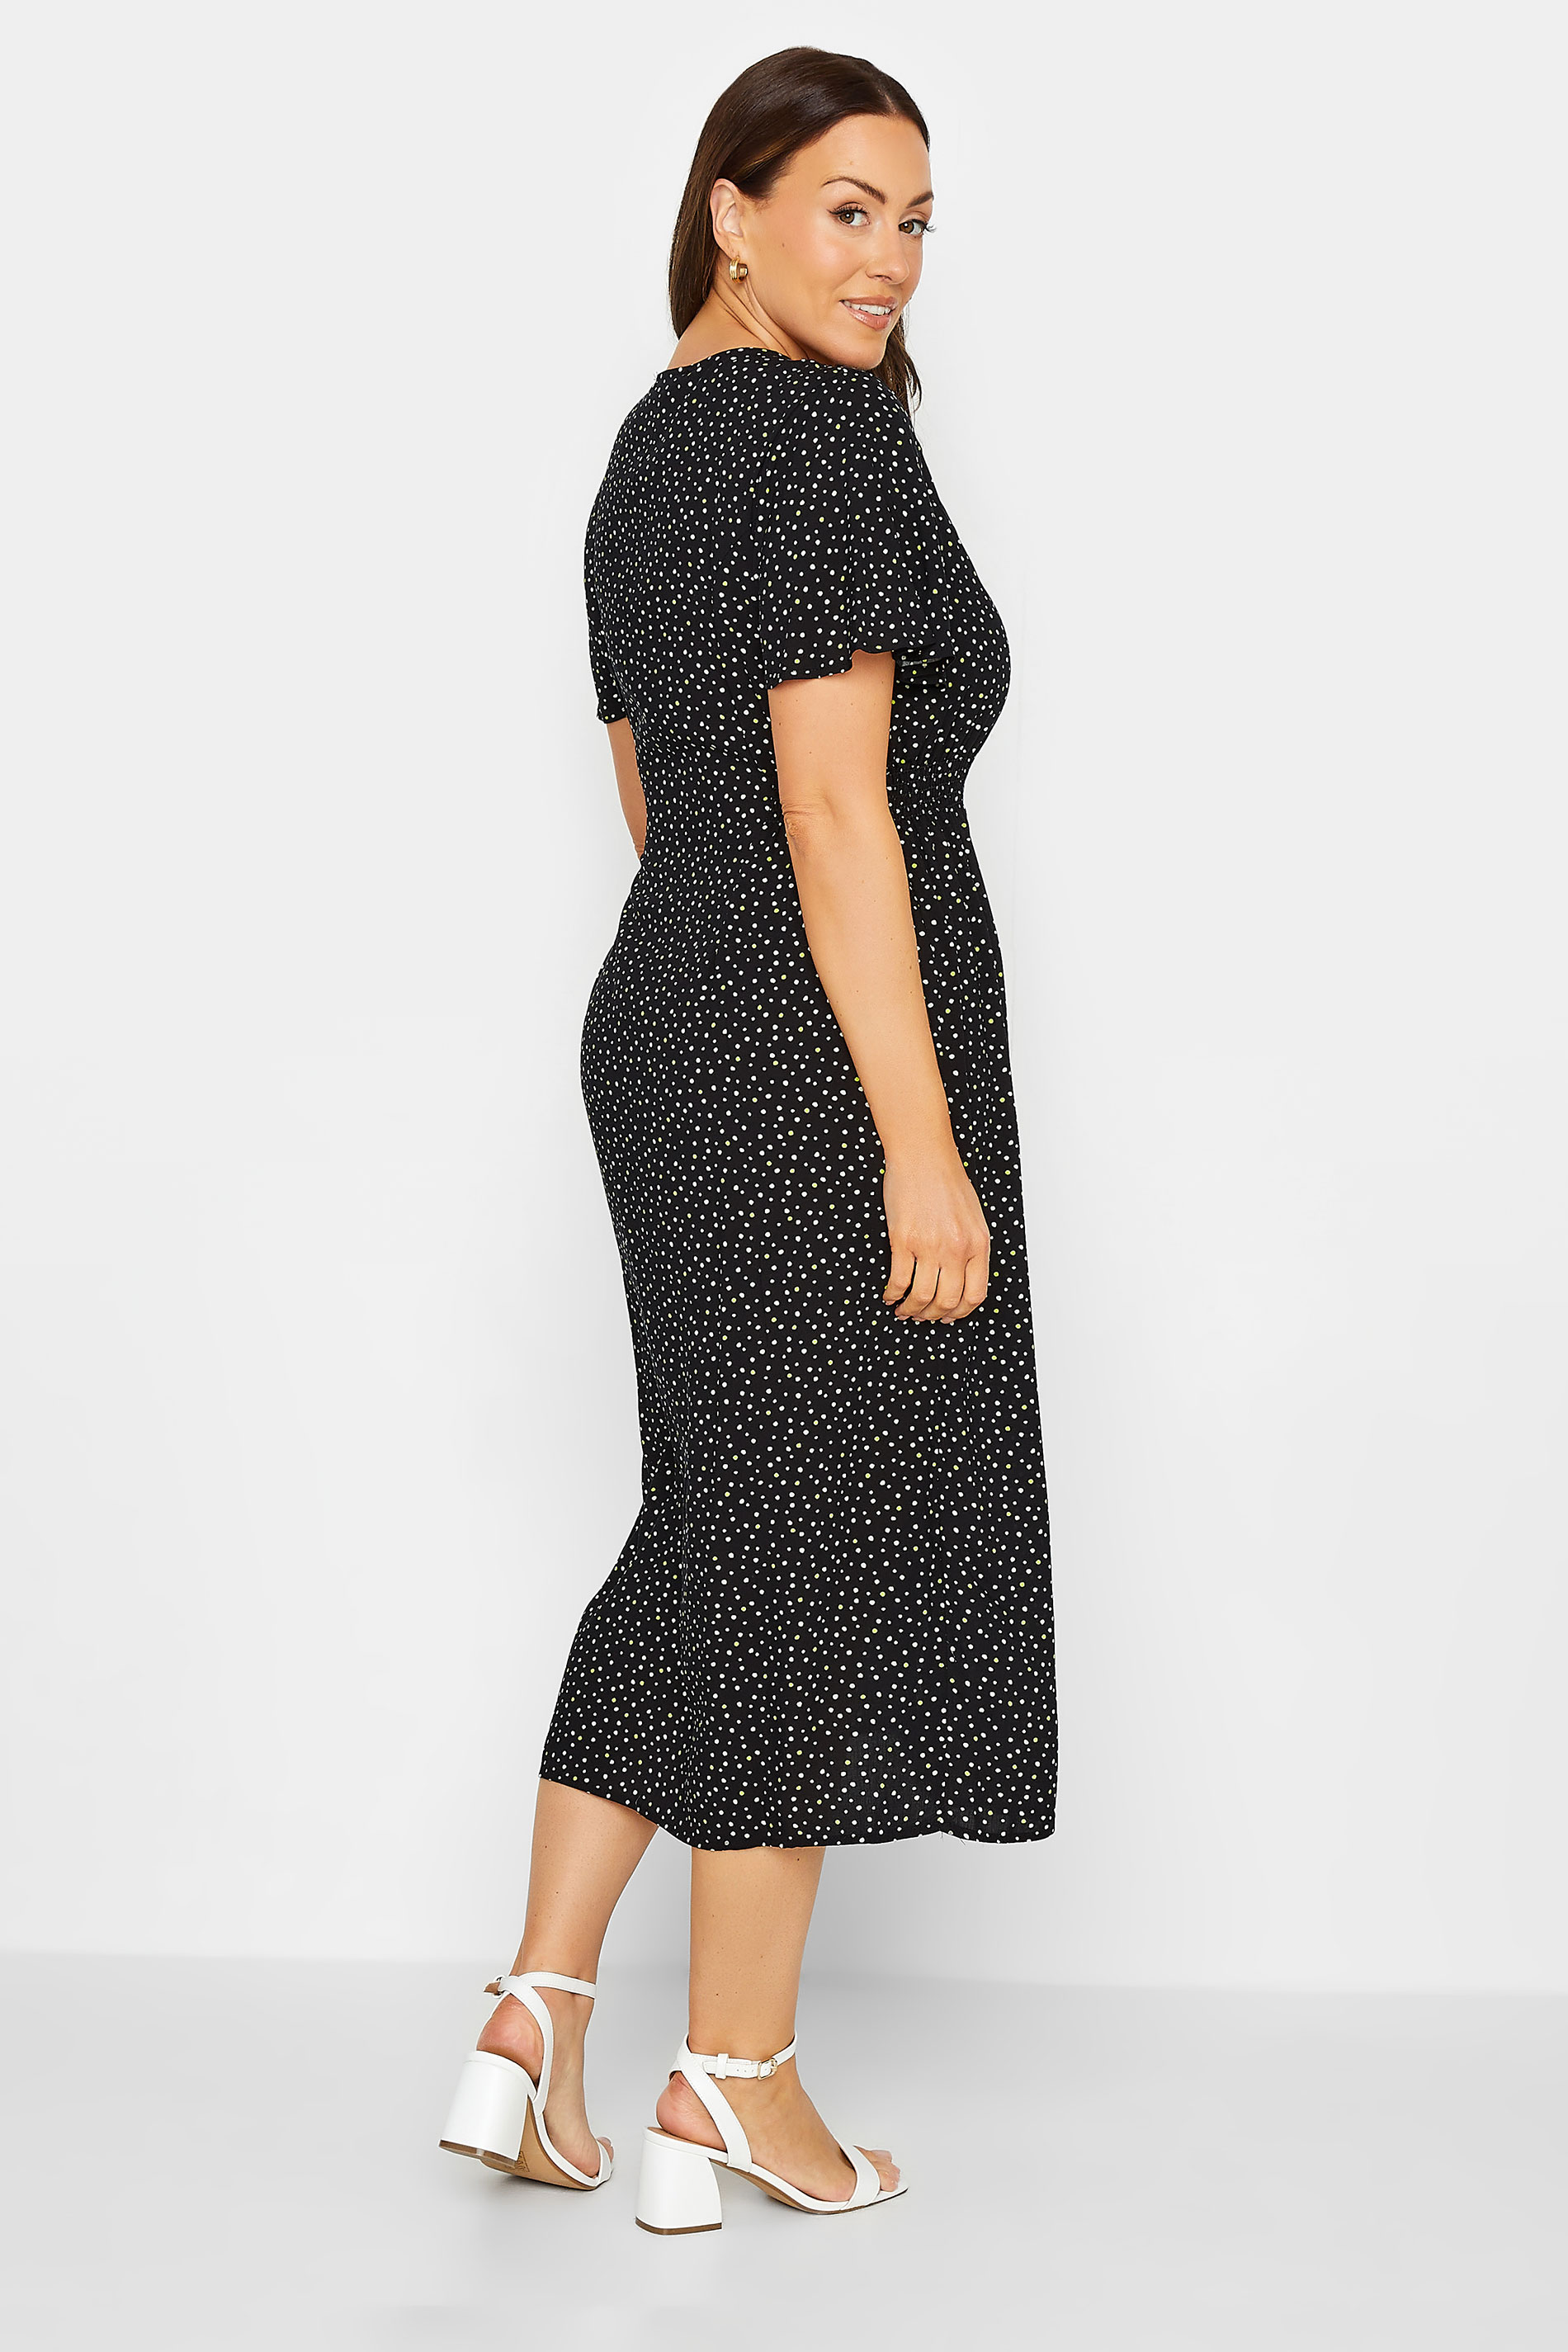 M&Co Black Spot Print Shirred Waist Dress | M&Co 3